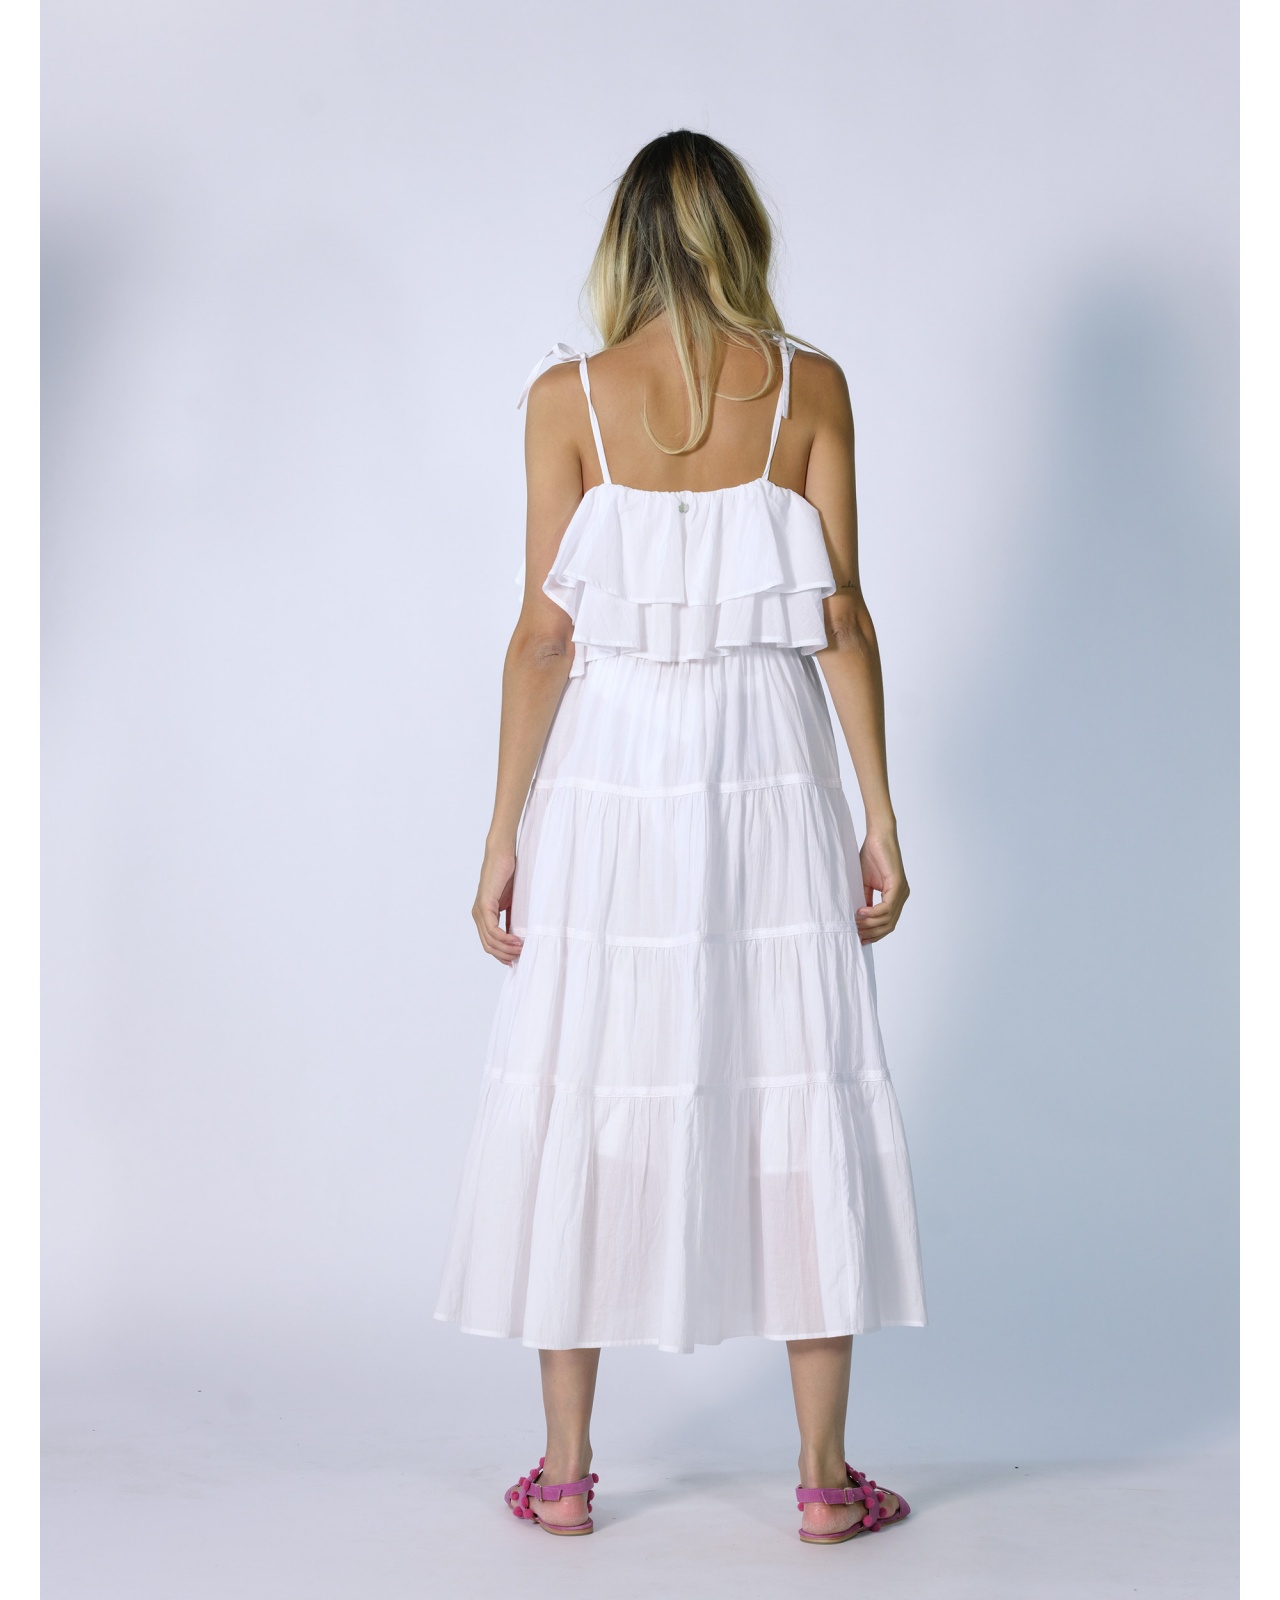 DRESS RIVIERA N°117 WHITE